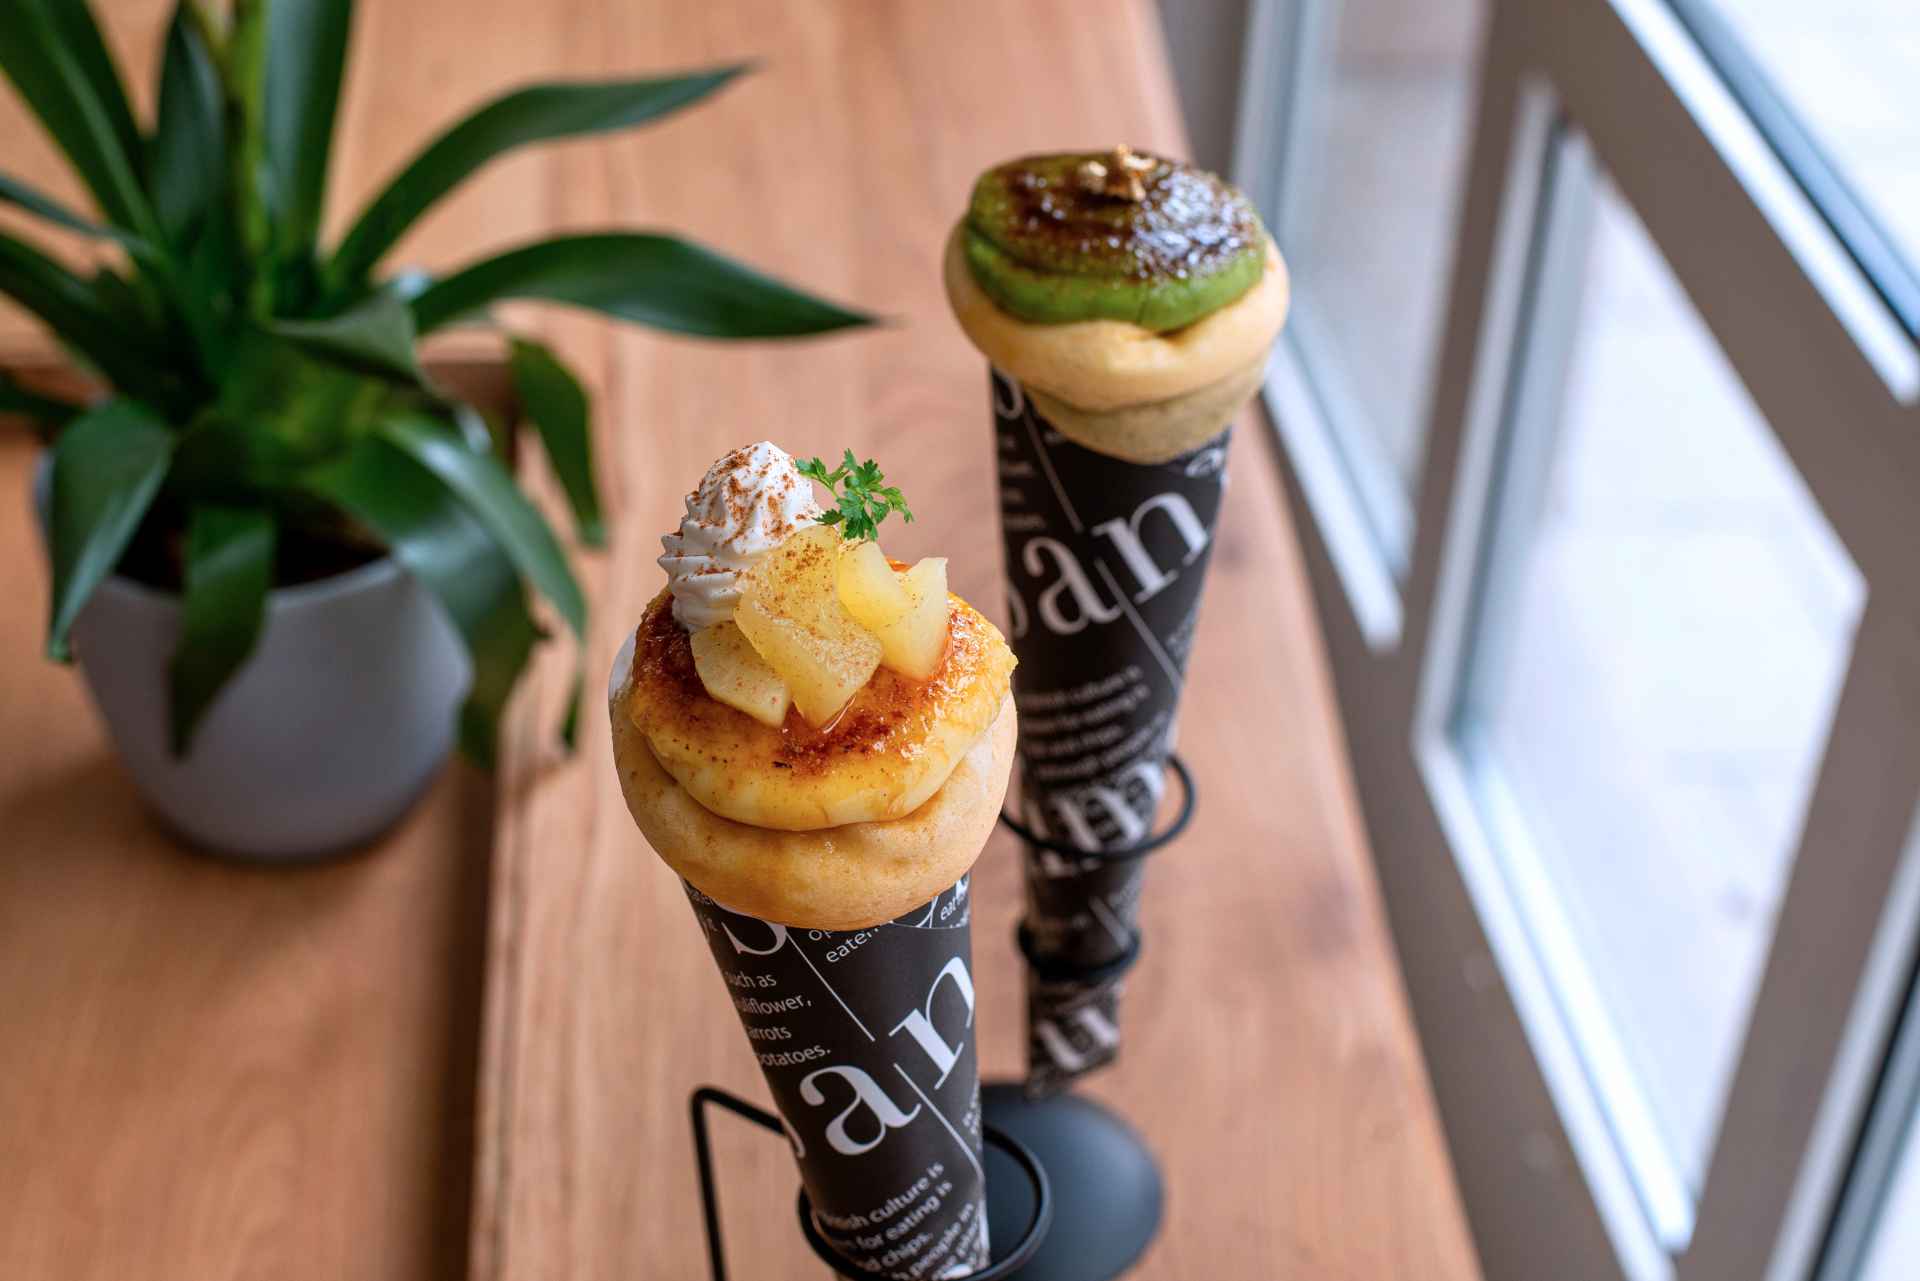 Crème-Brûlée-Crêpes von “Japan Streetfood” in München